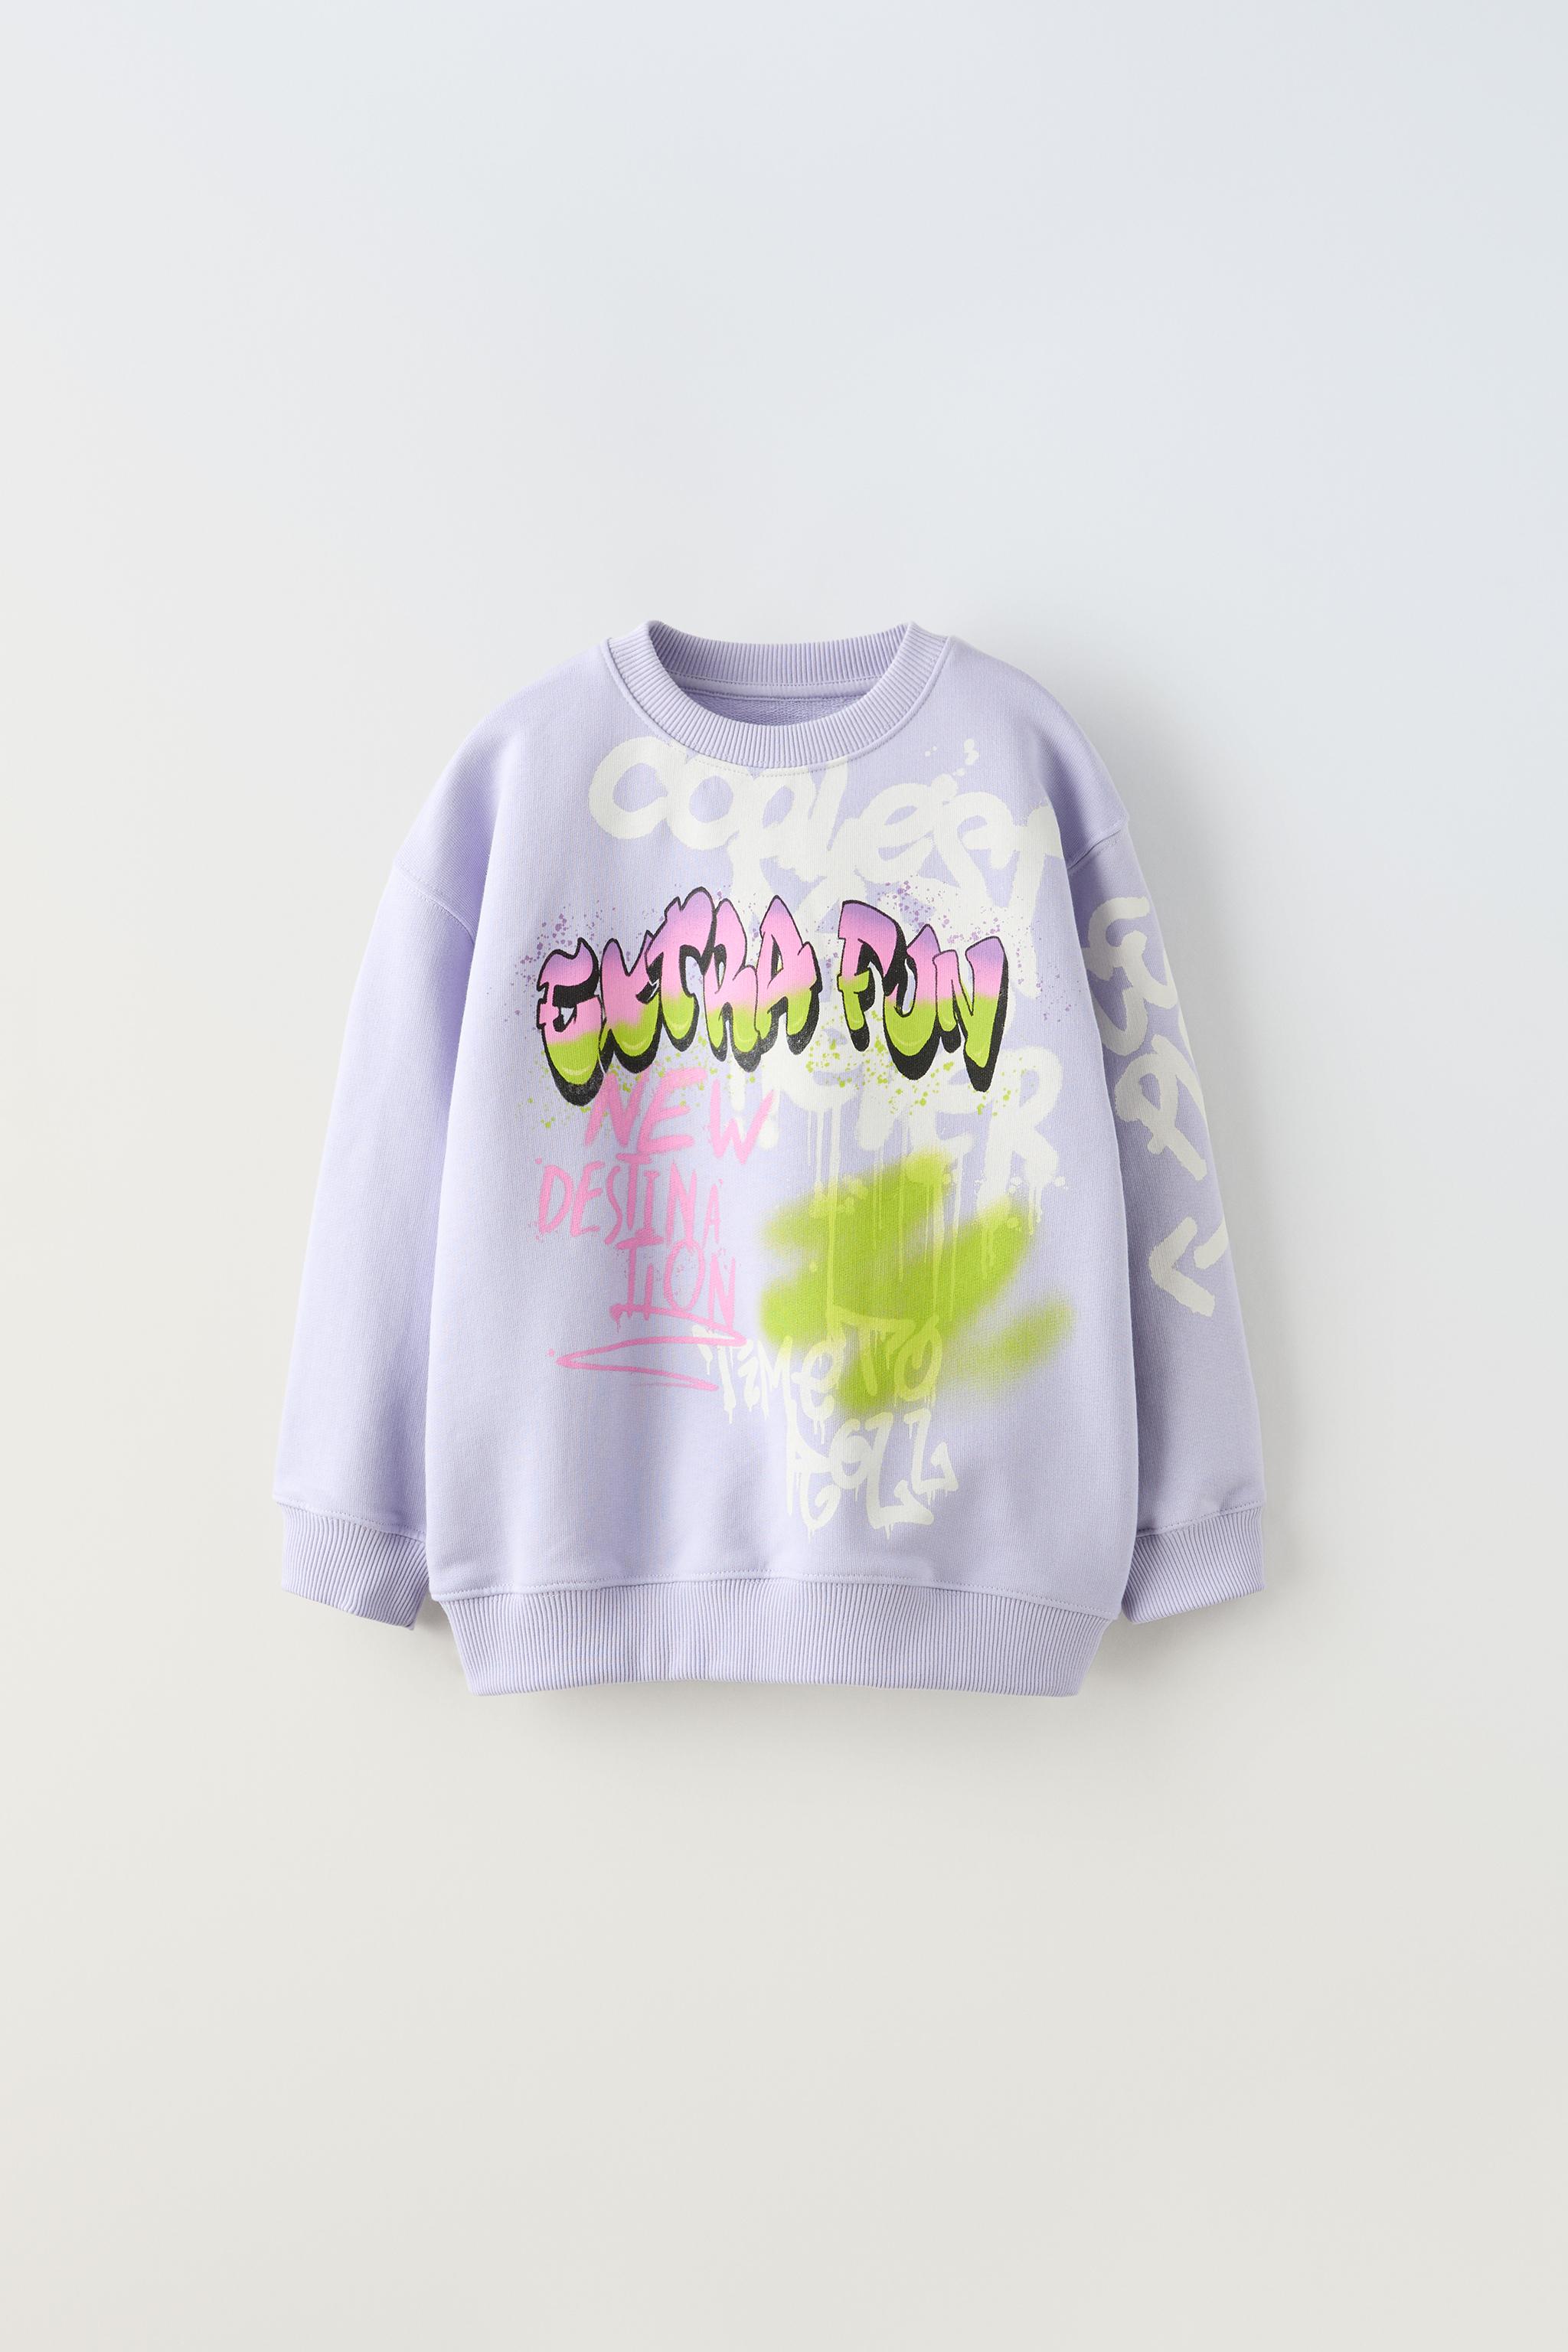 🆕NWT Zara Graffiti Sweatshirt